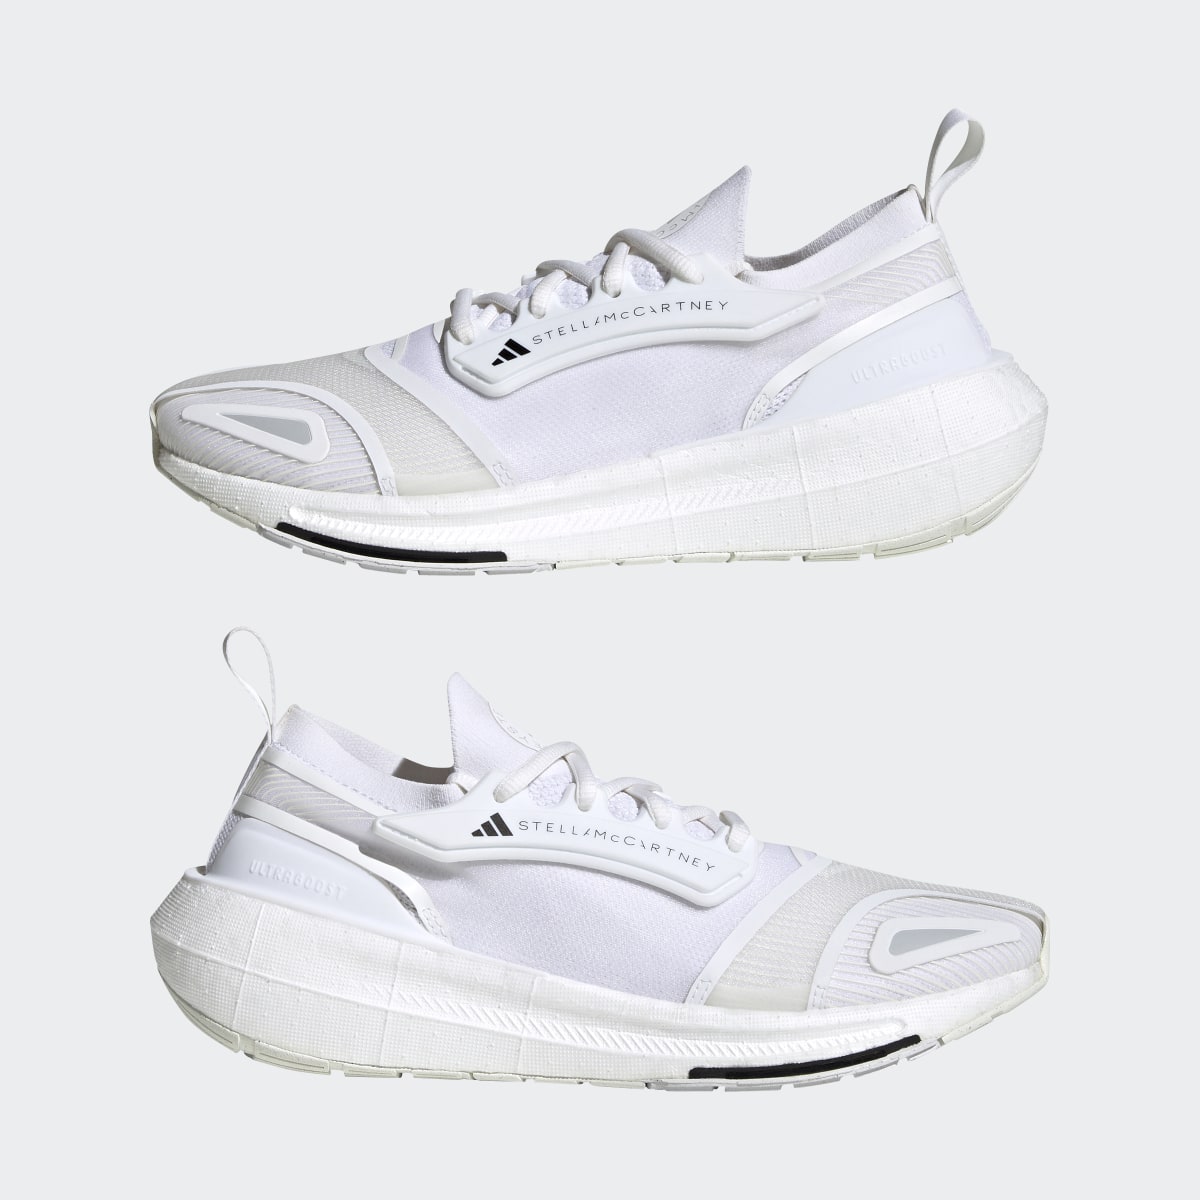 Adidas by Stella McCartney Ultraboost Light Shoes. 8